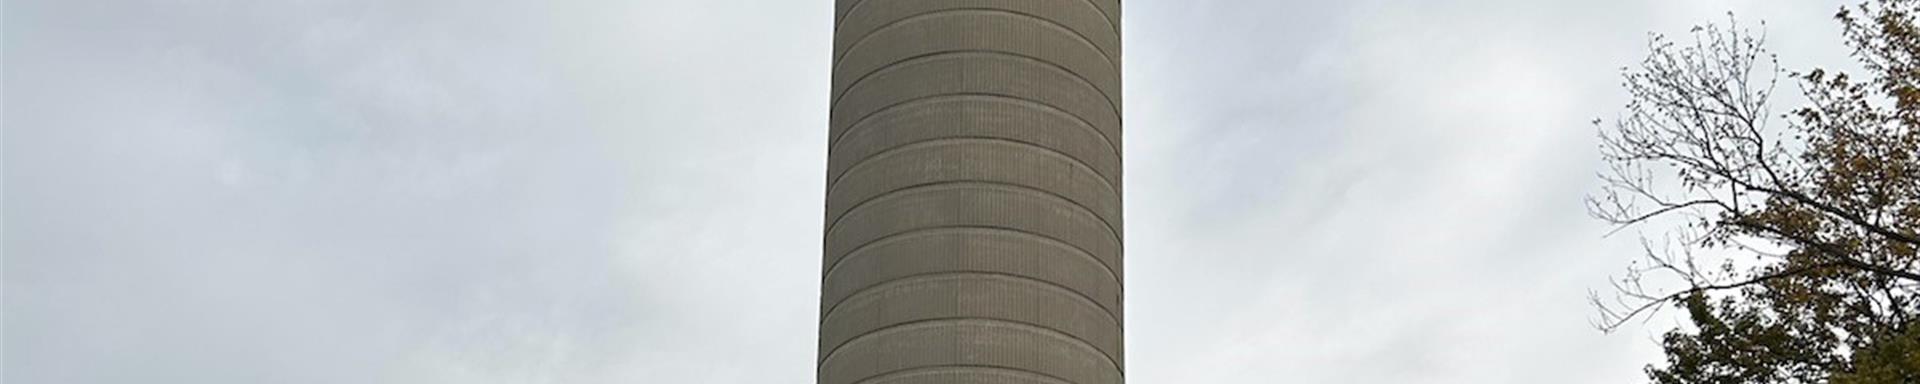 Image of Mitchells Bay Water Tank